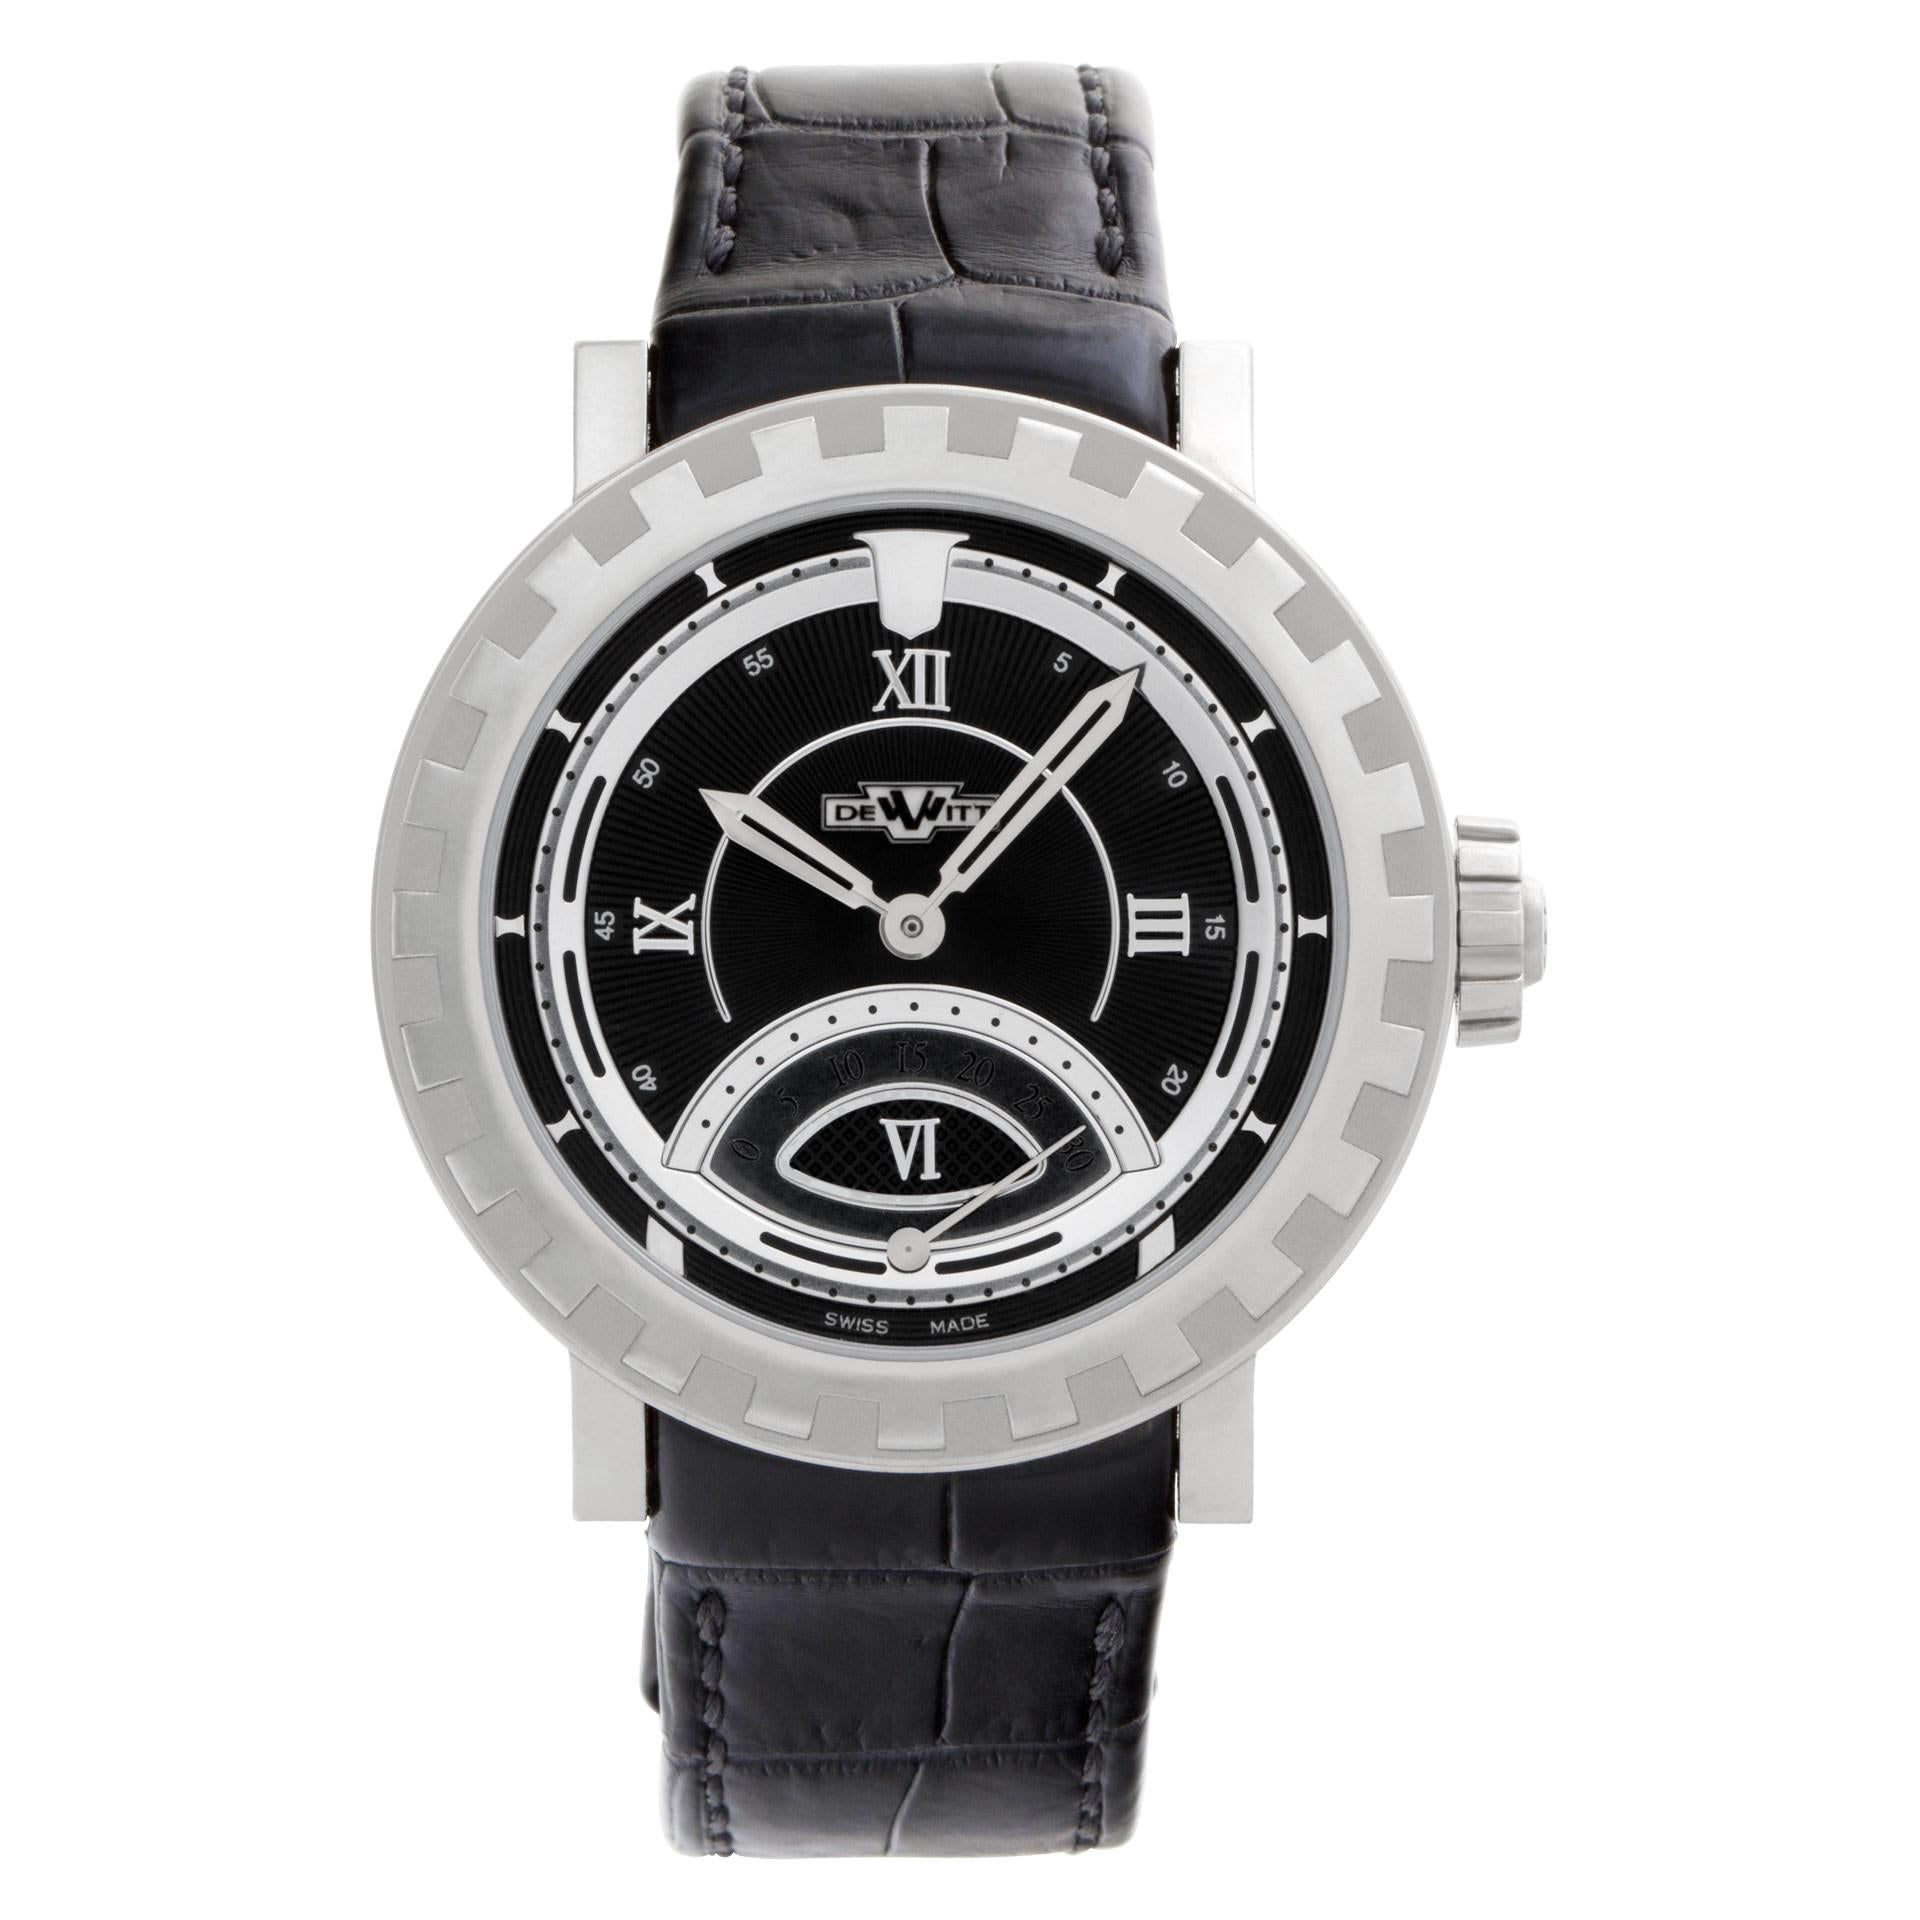 DeWitt Academia Seconde Retrograde 18k white gold Auto wristwatch For Sale